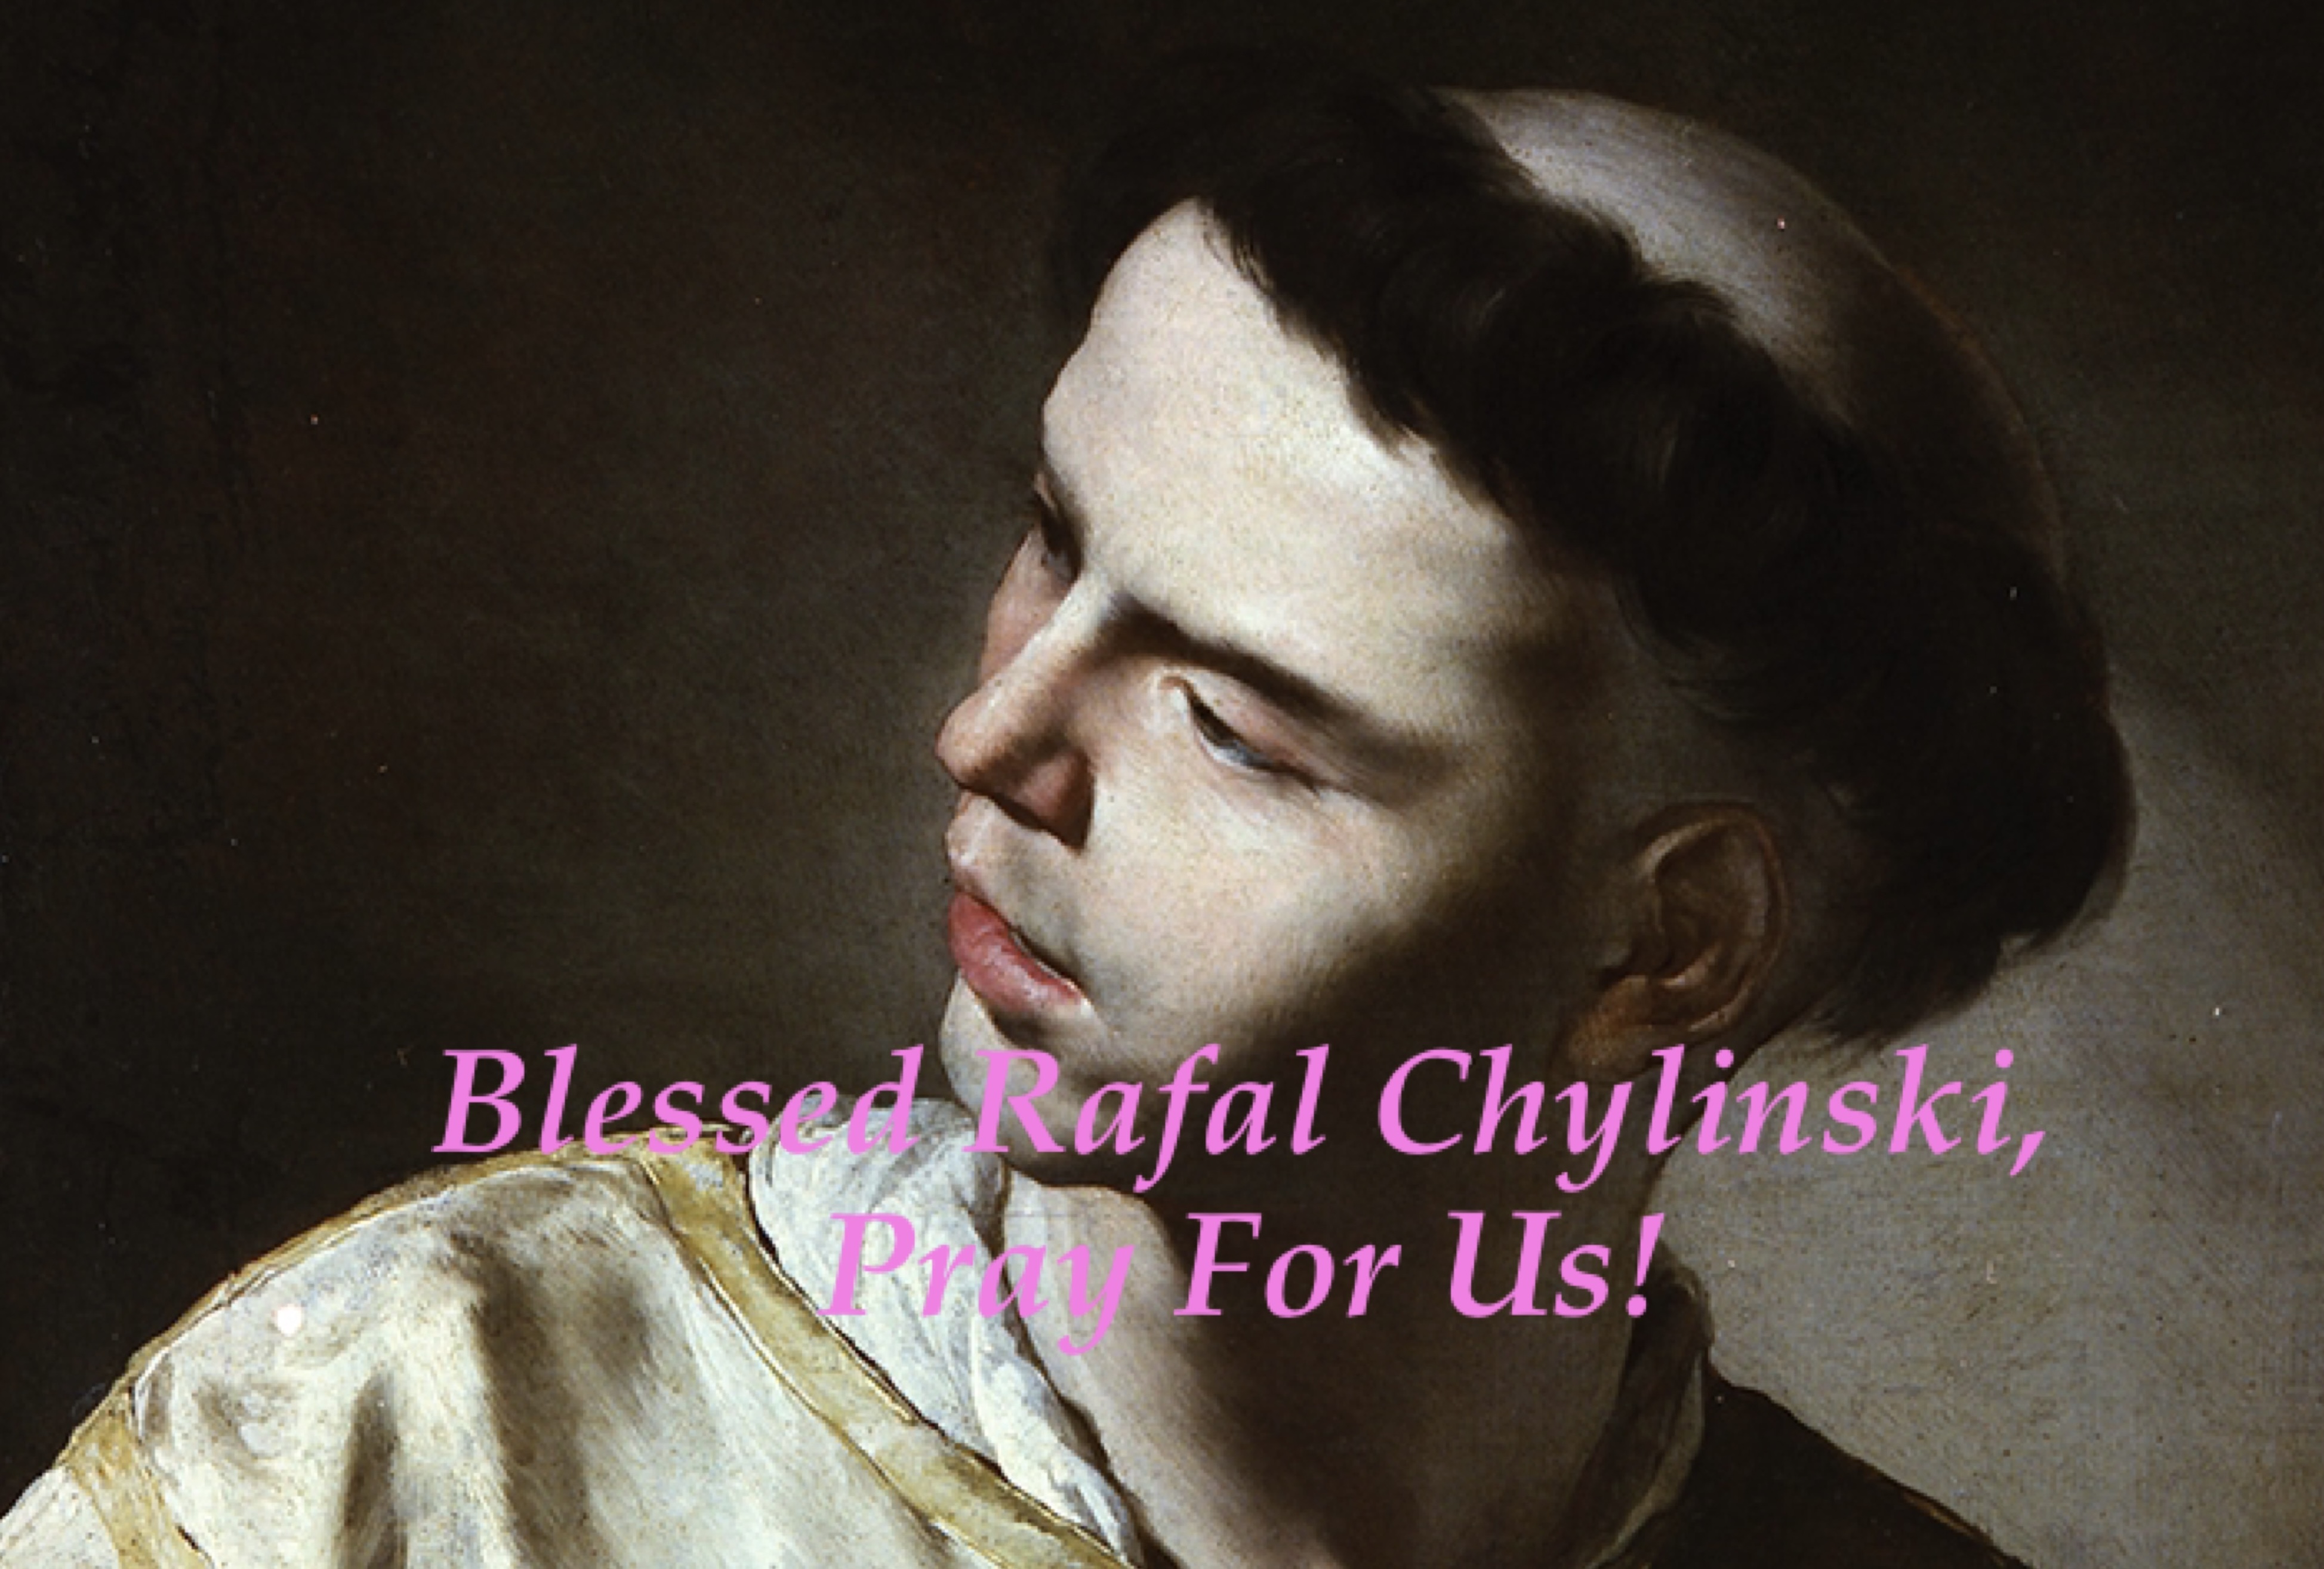 2nd December - Blessed Rafal Chylinski